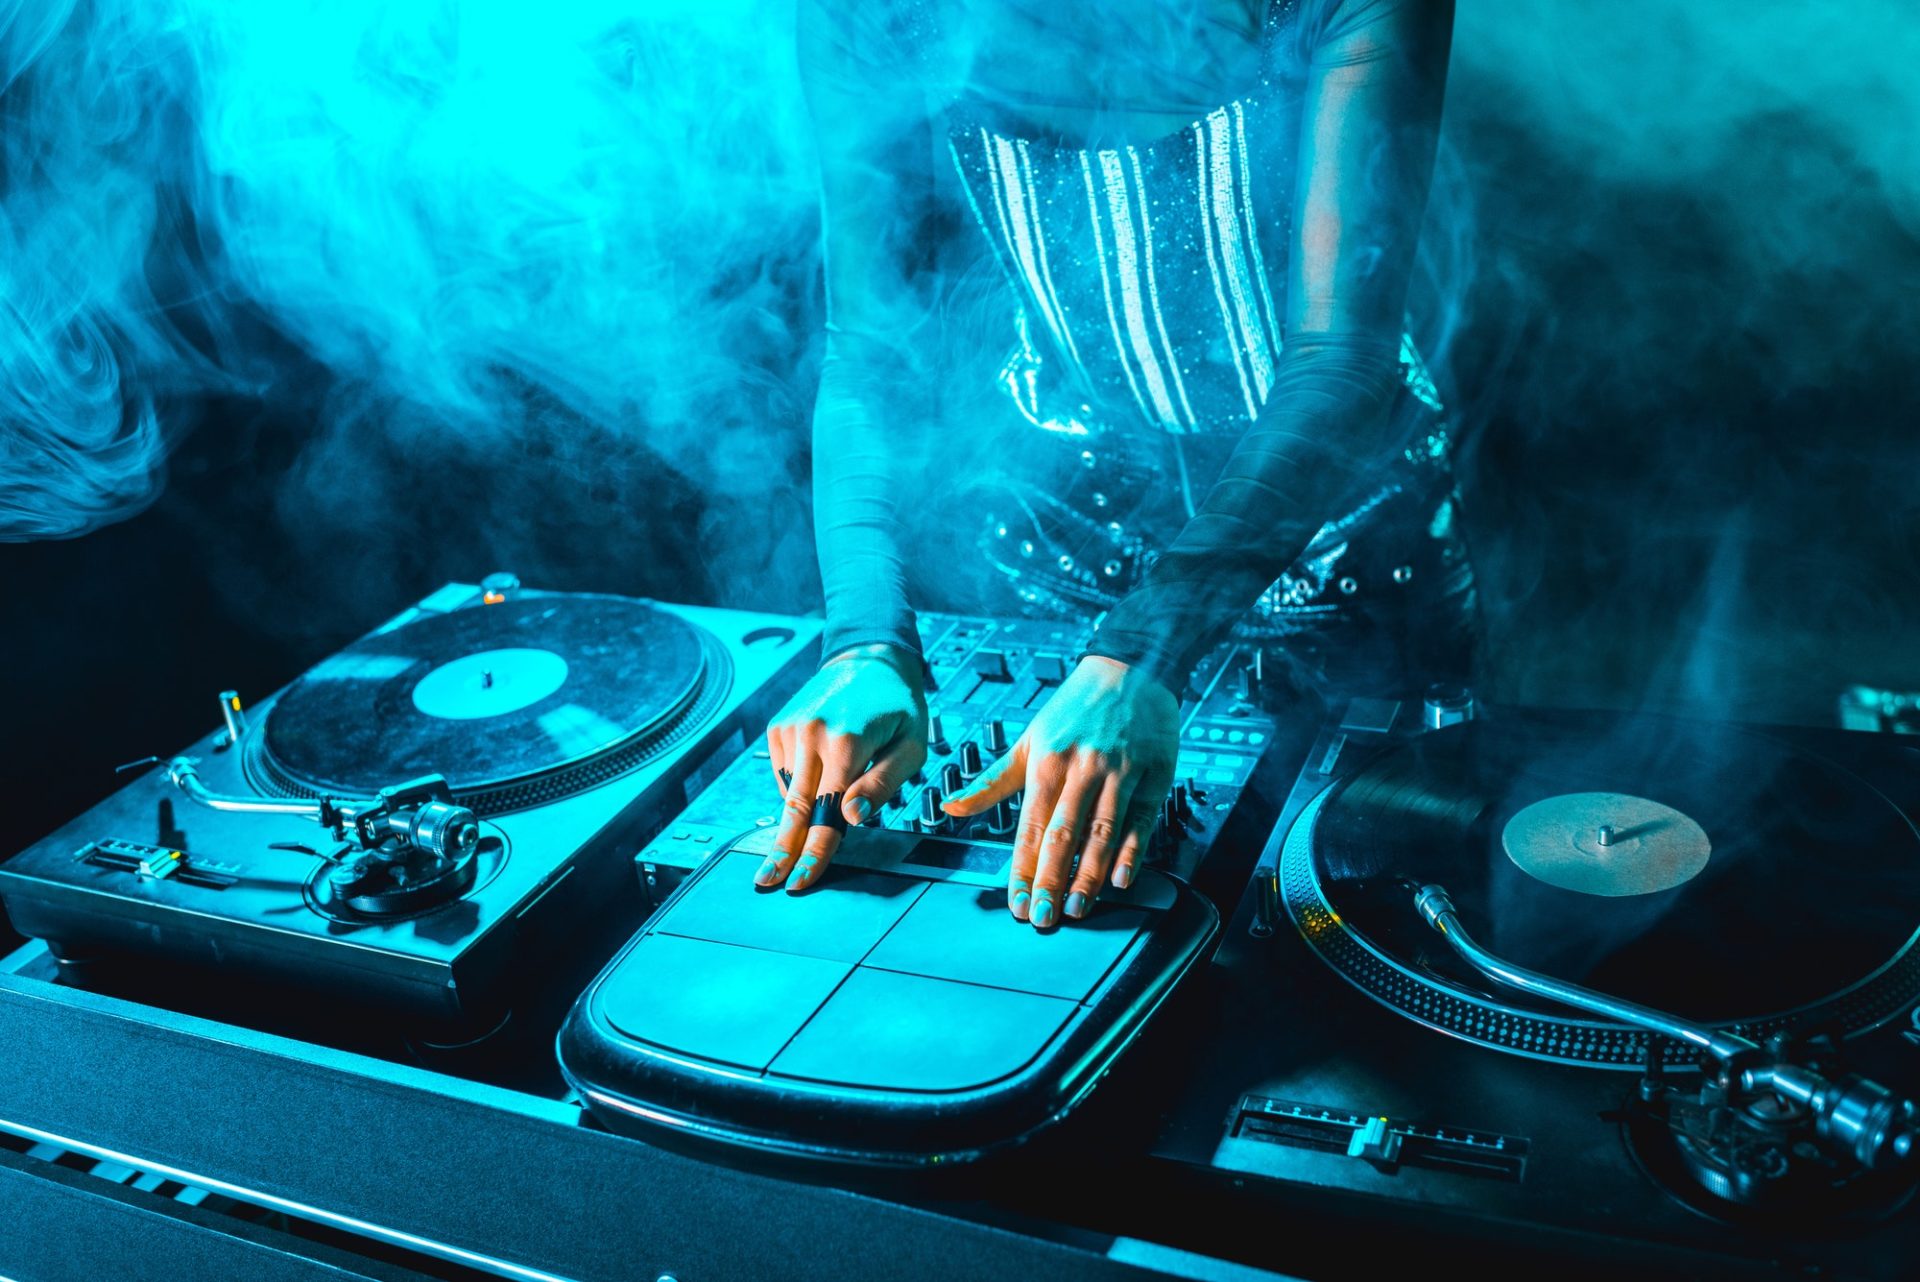 cropped view of dj woman using dj equipment in nightclub with smoke